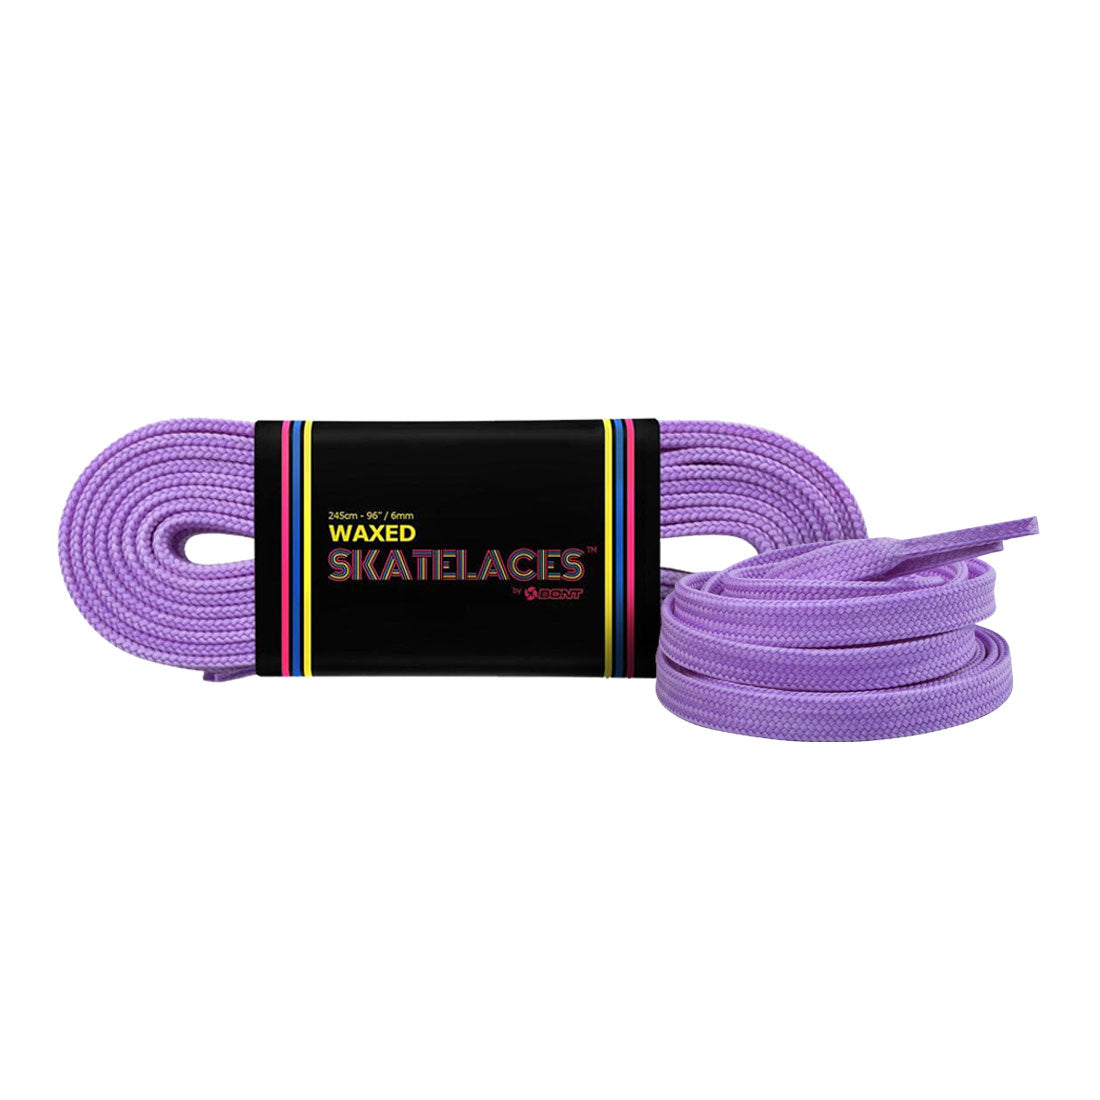 Bont Waxed 6mm Laces - 200cm/79in Amethyst Purple Laces